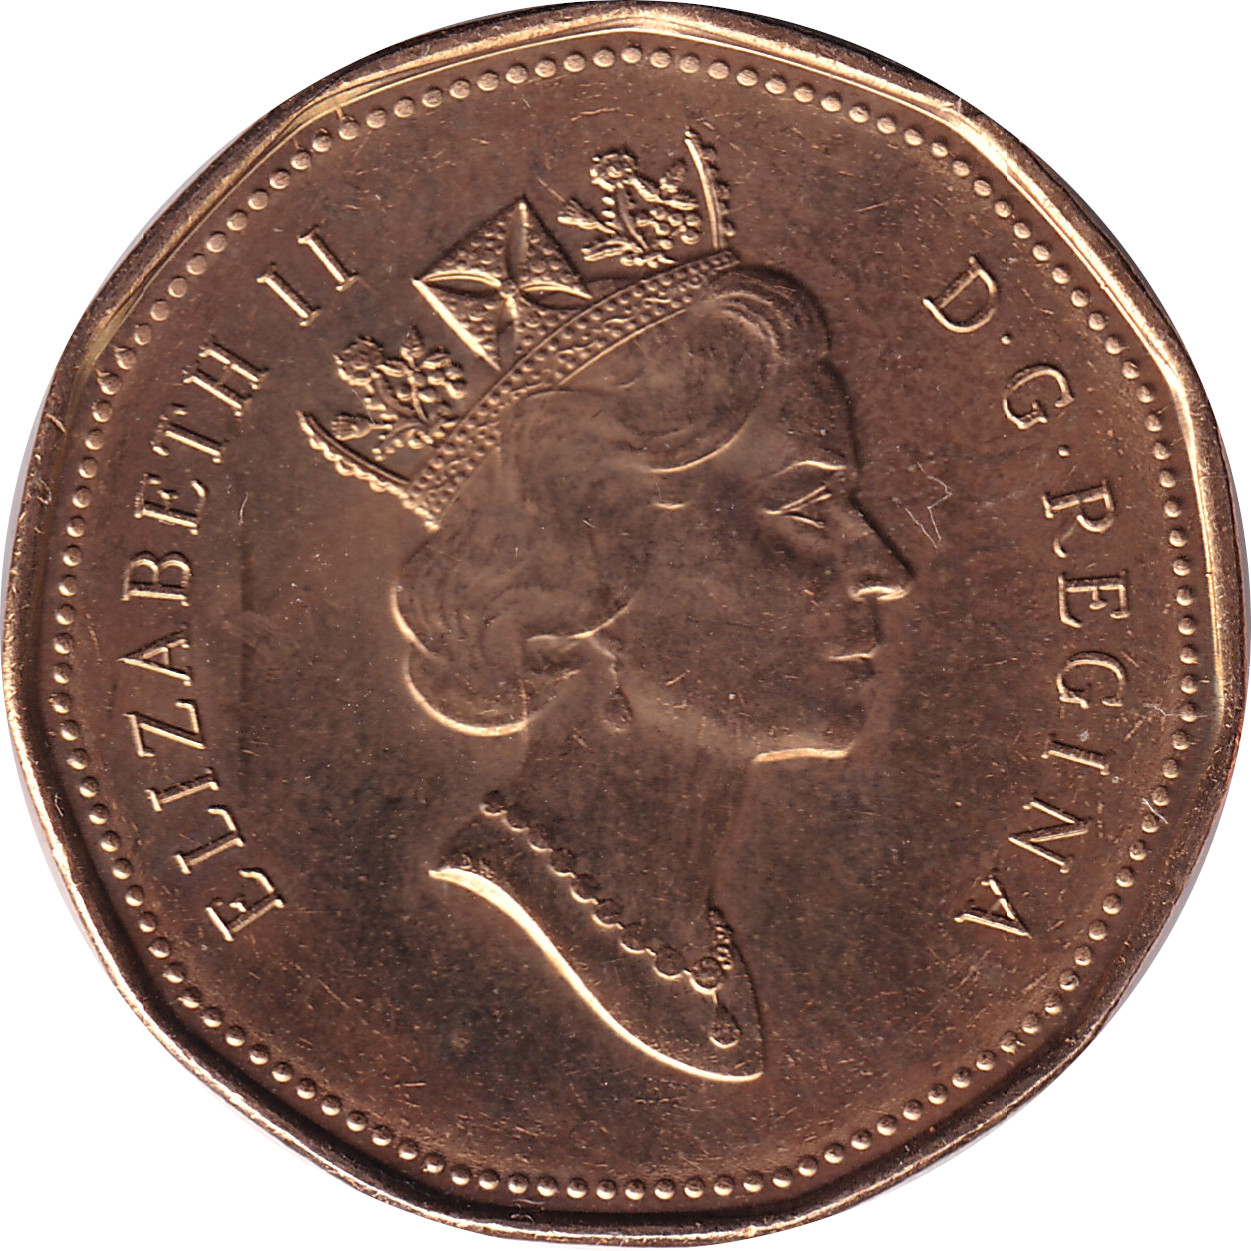 1 dollar - Elizabeth II - Mature head